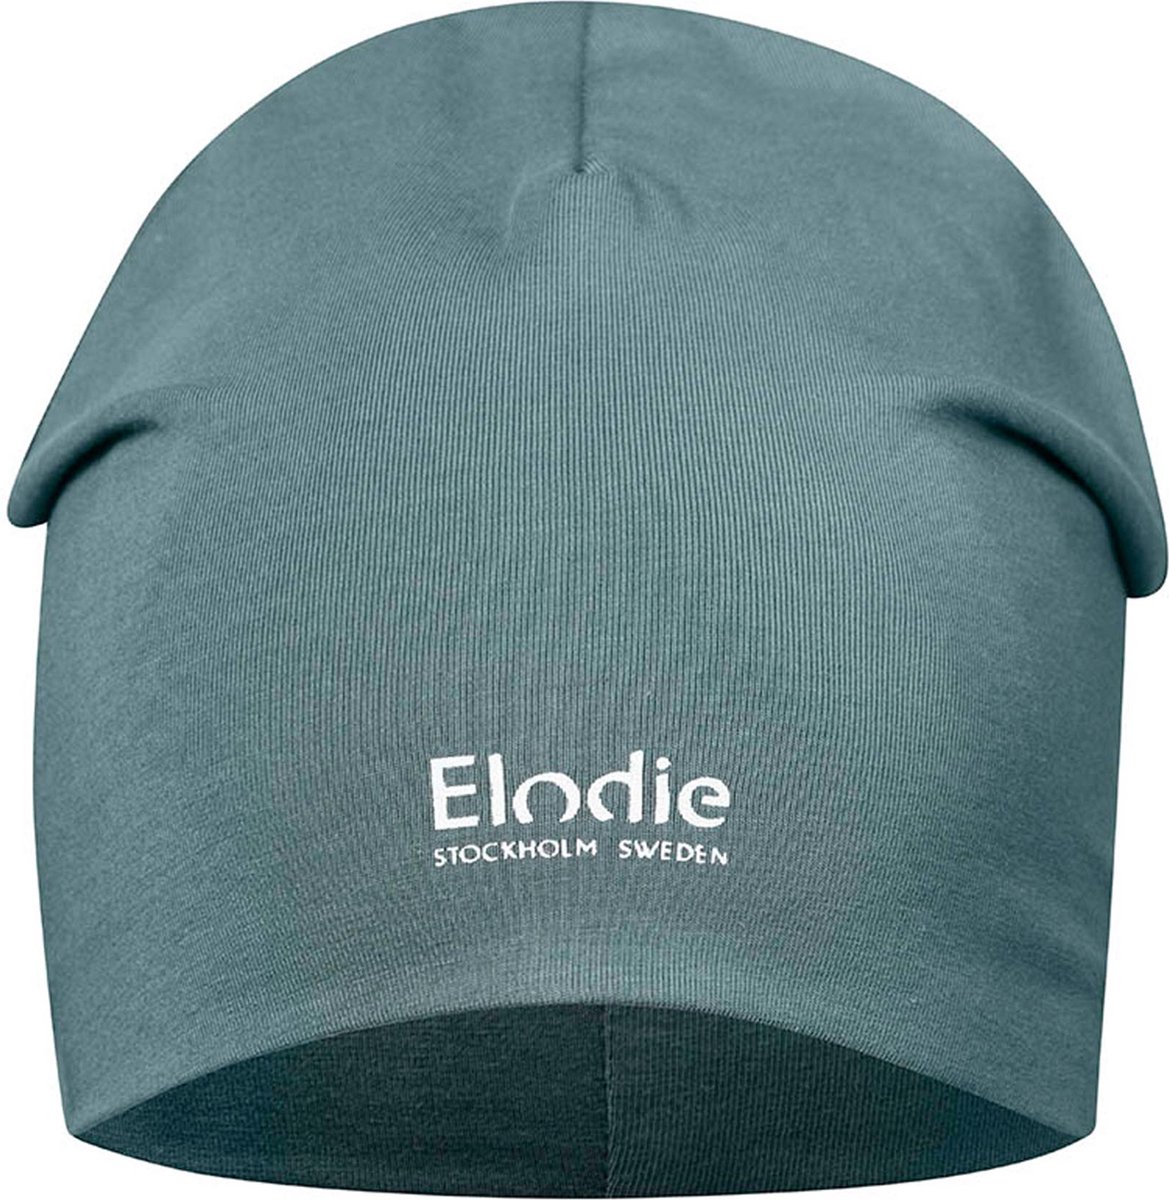 Elodie Logo Beanies - Beanie - Muts Baby - Muts kind -Deco Turquoise - 0/6 maanden